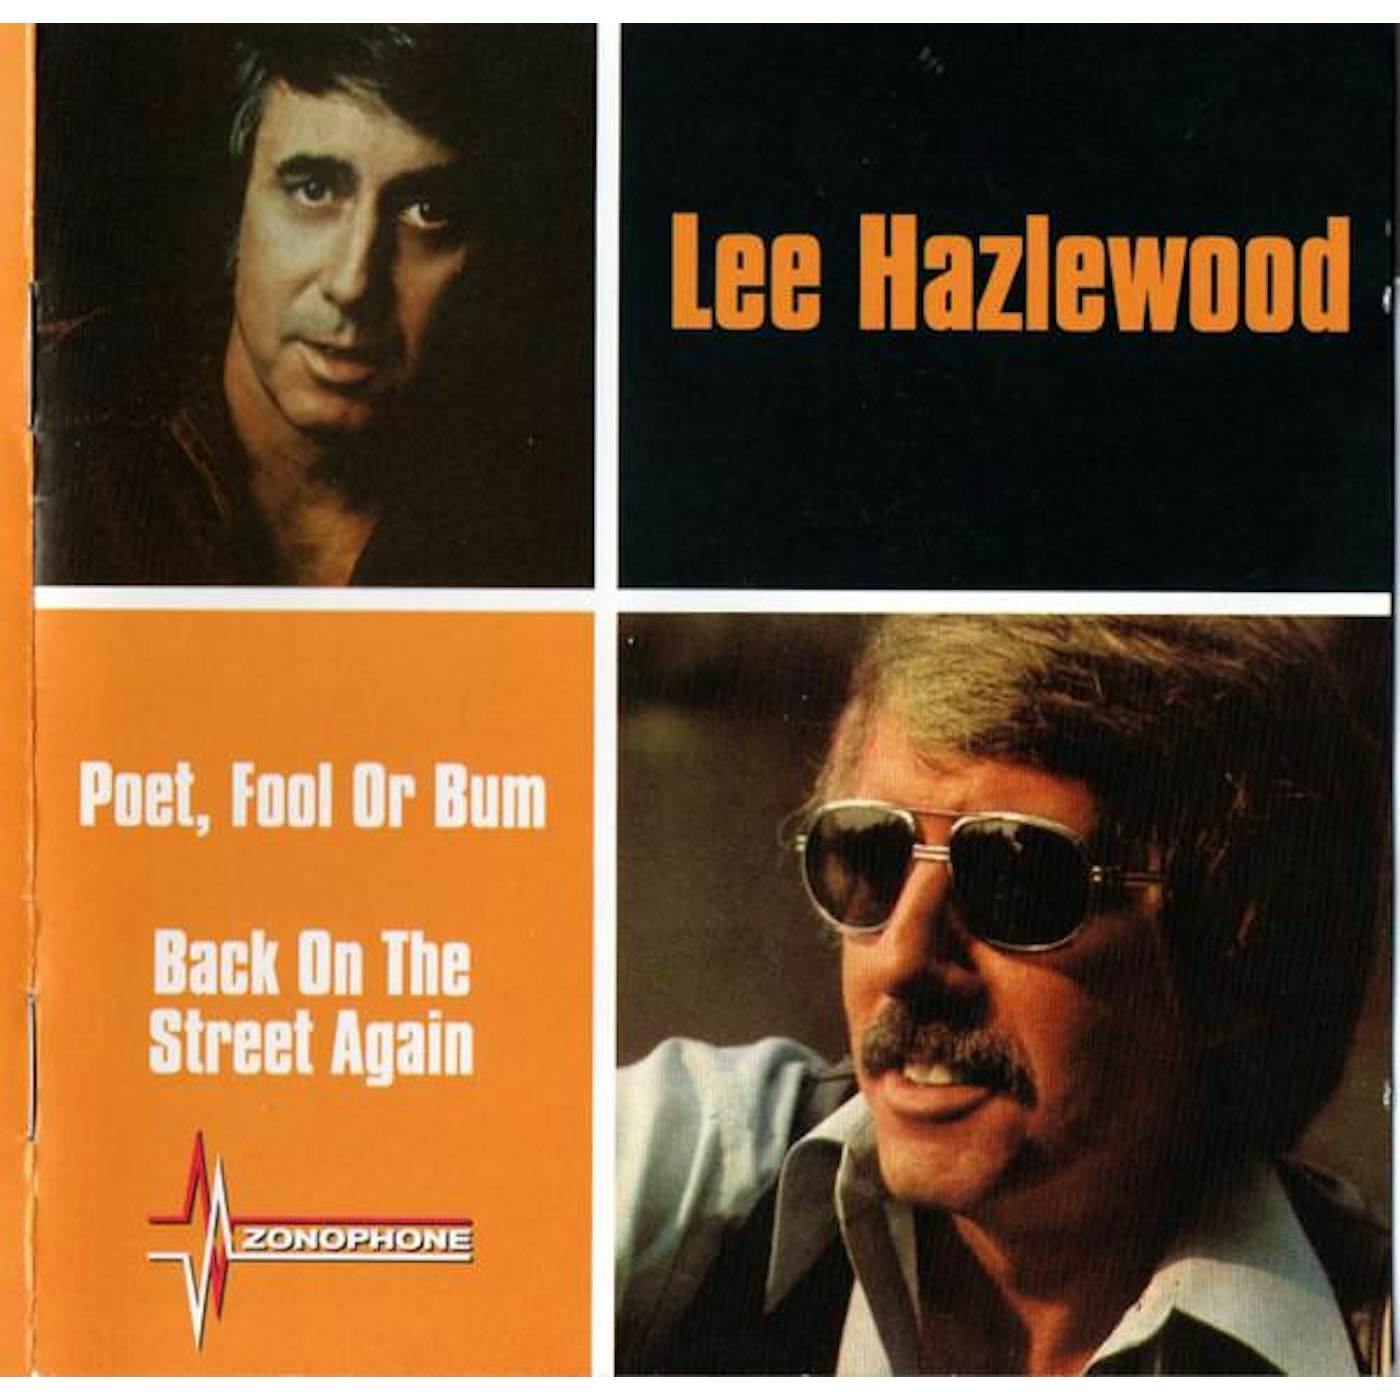 Lee Hazlewood POET FOOL OR BUM / BACK ON THE STREET AGAIN CD